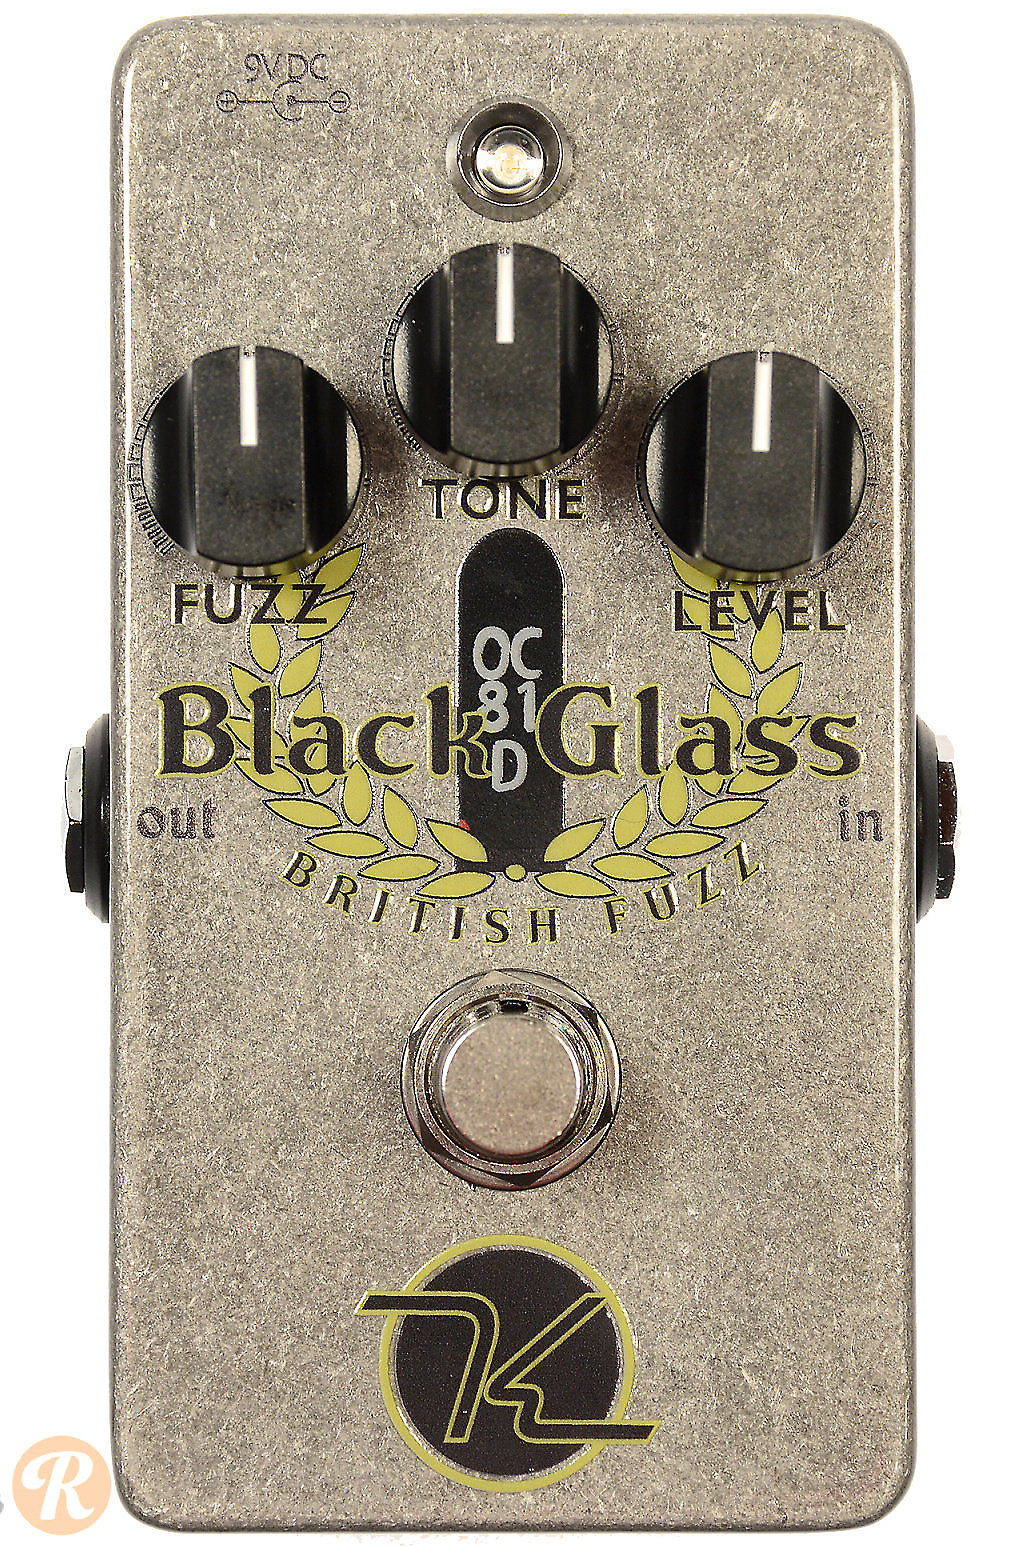 Keeley Black Glass Limited Edition British Fuzz | Reverb